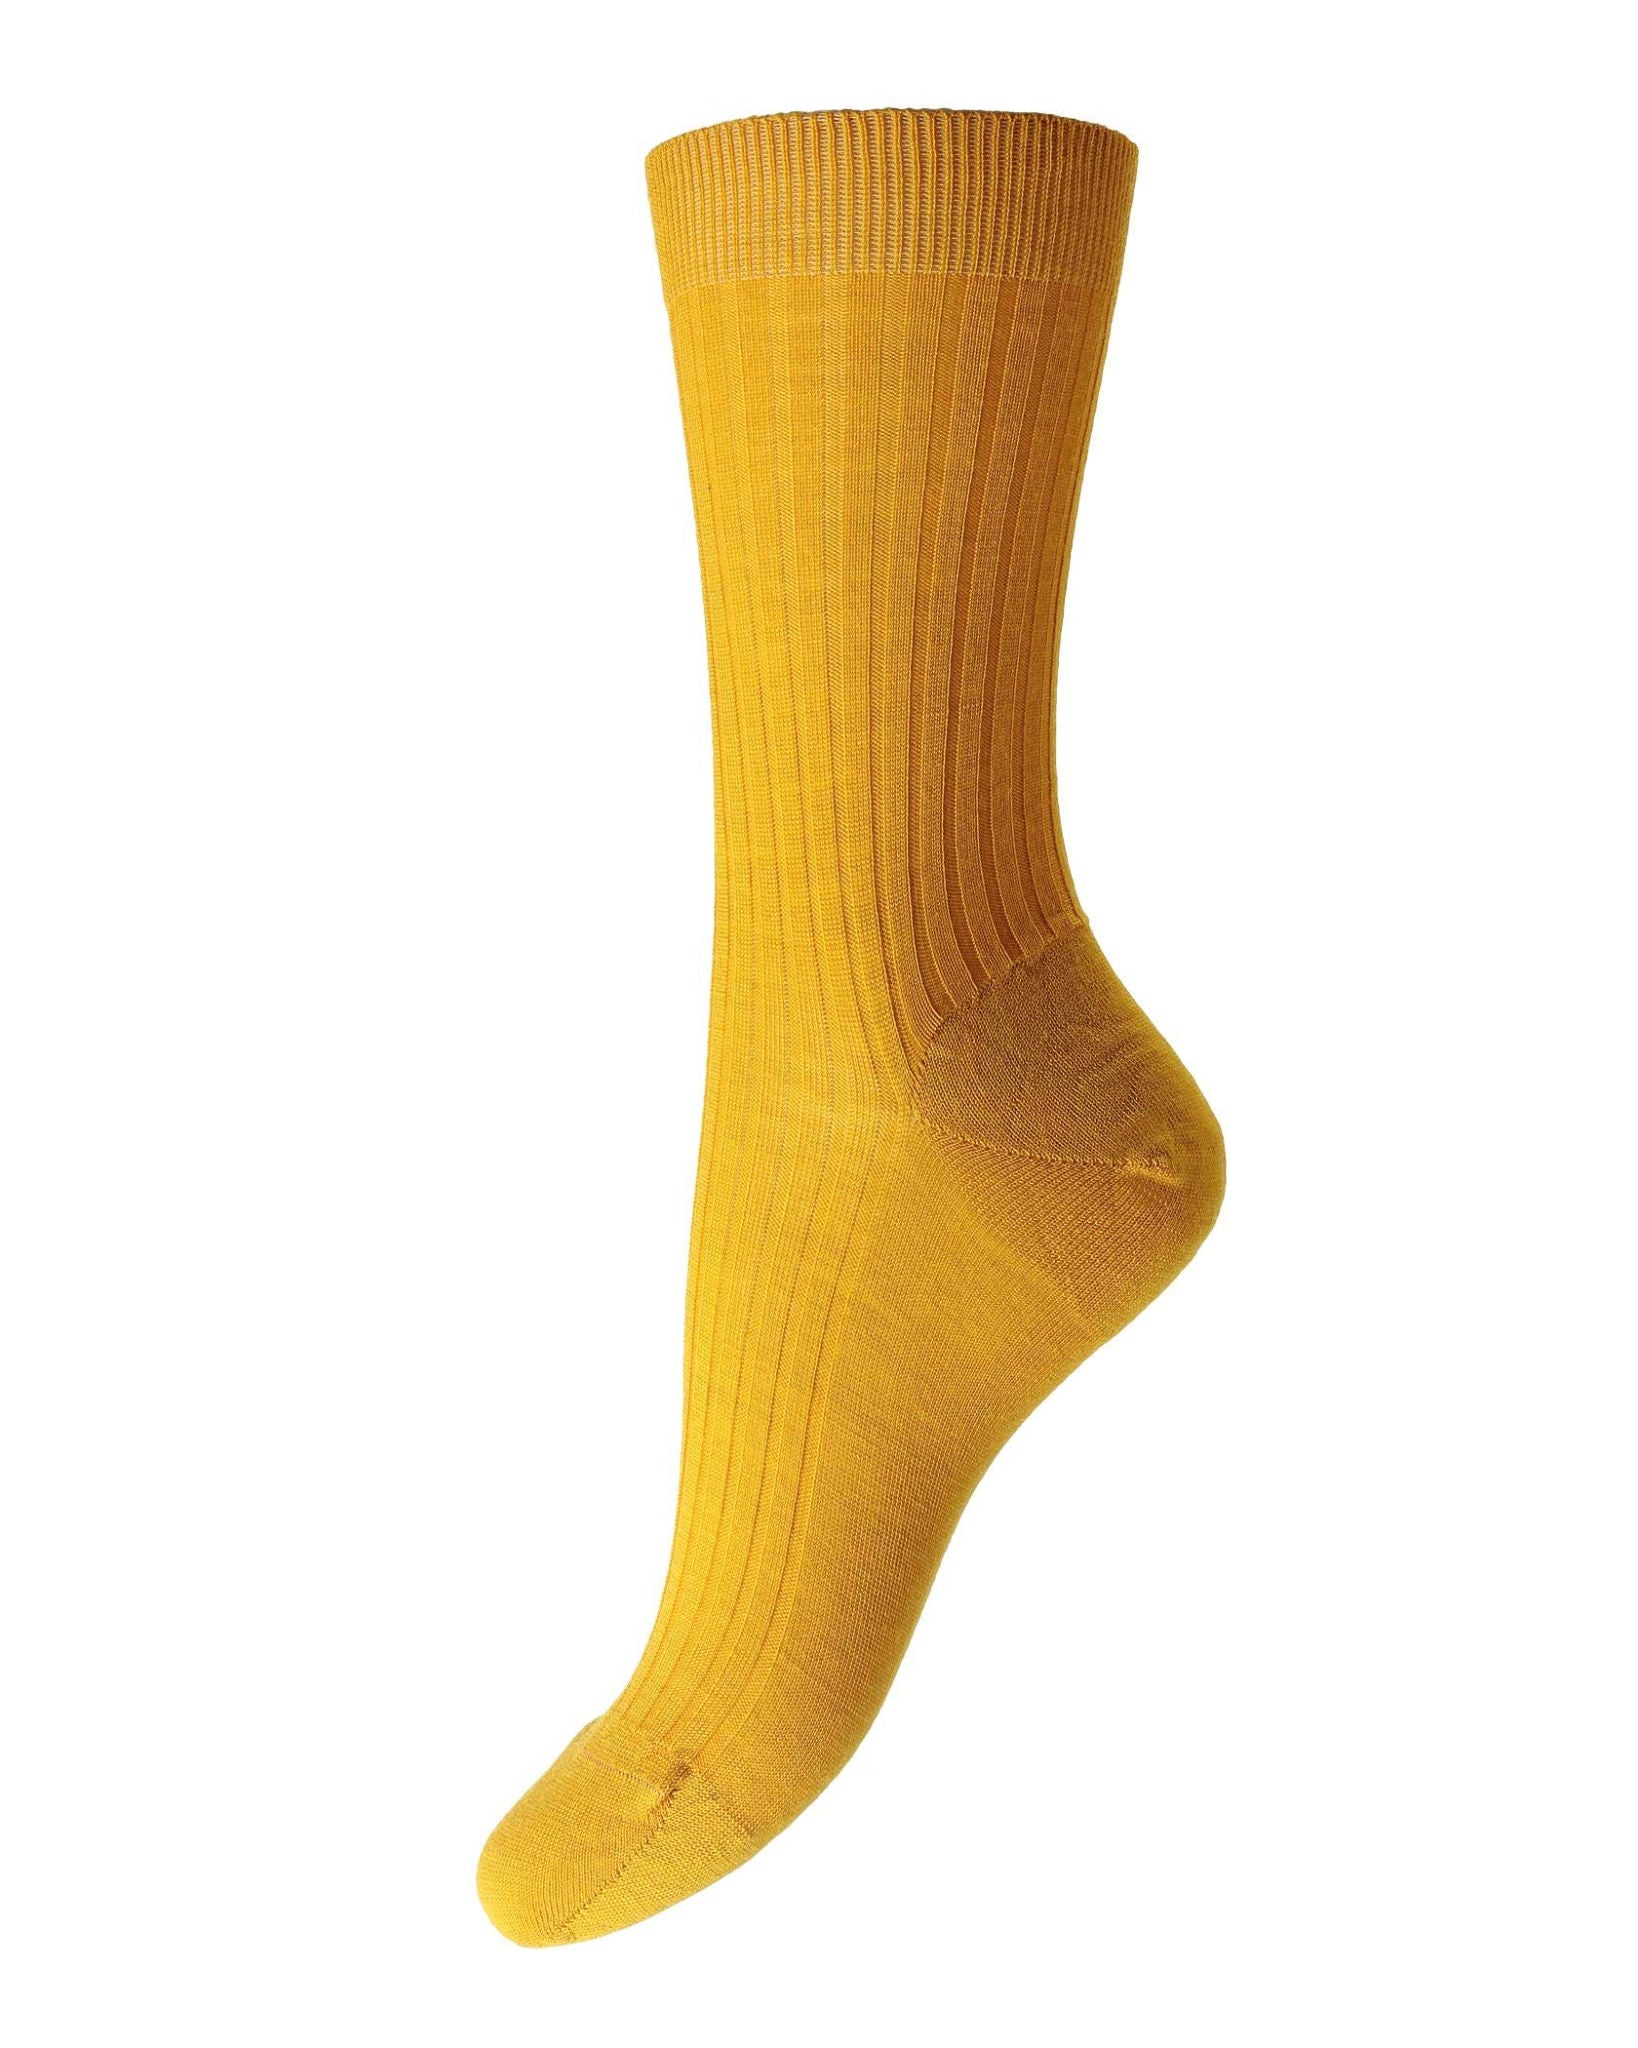 Rose Socks - Bright Gold